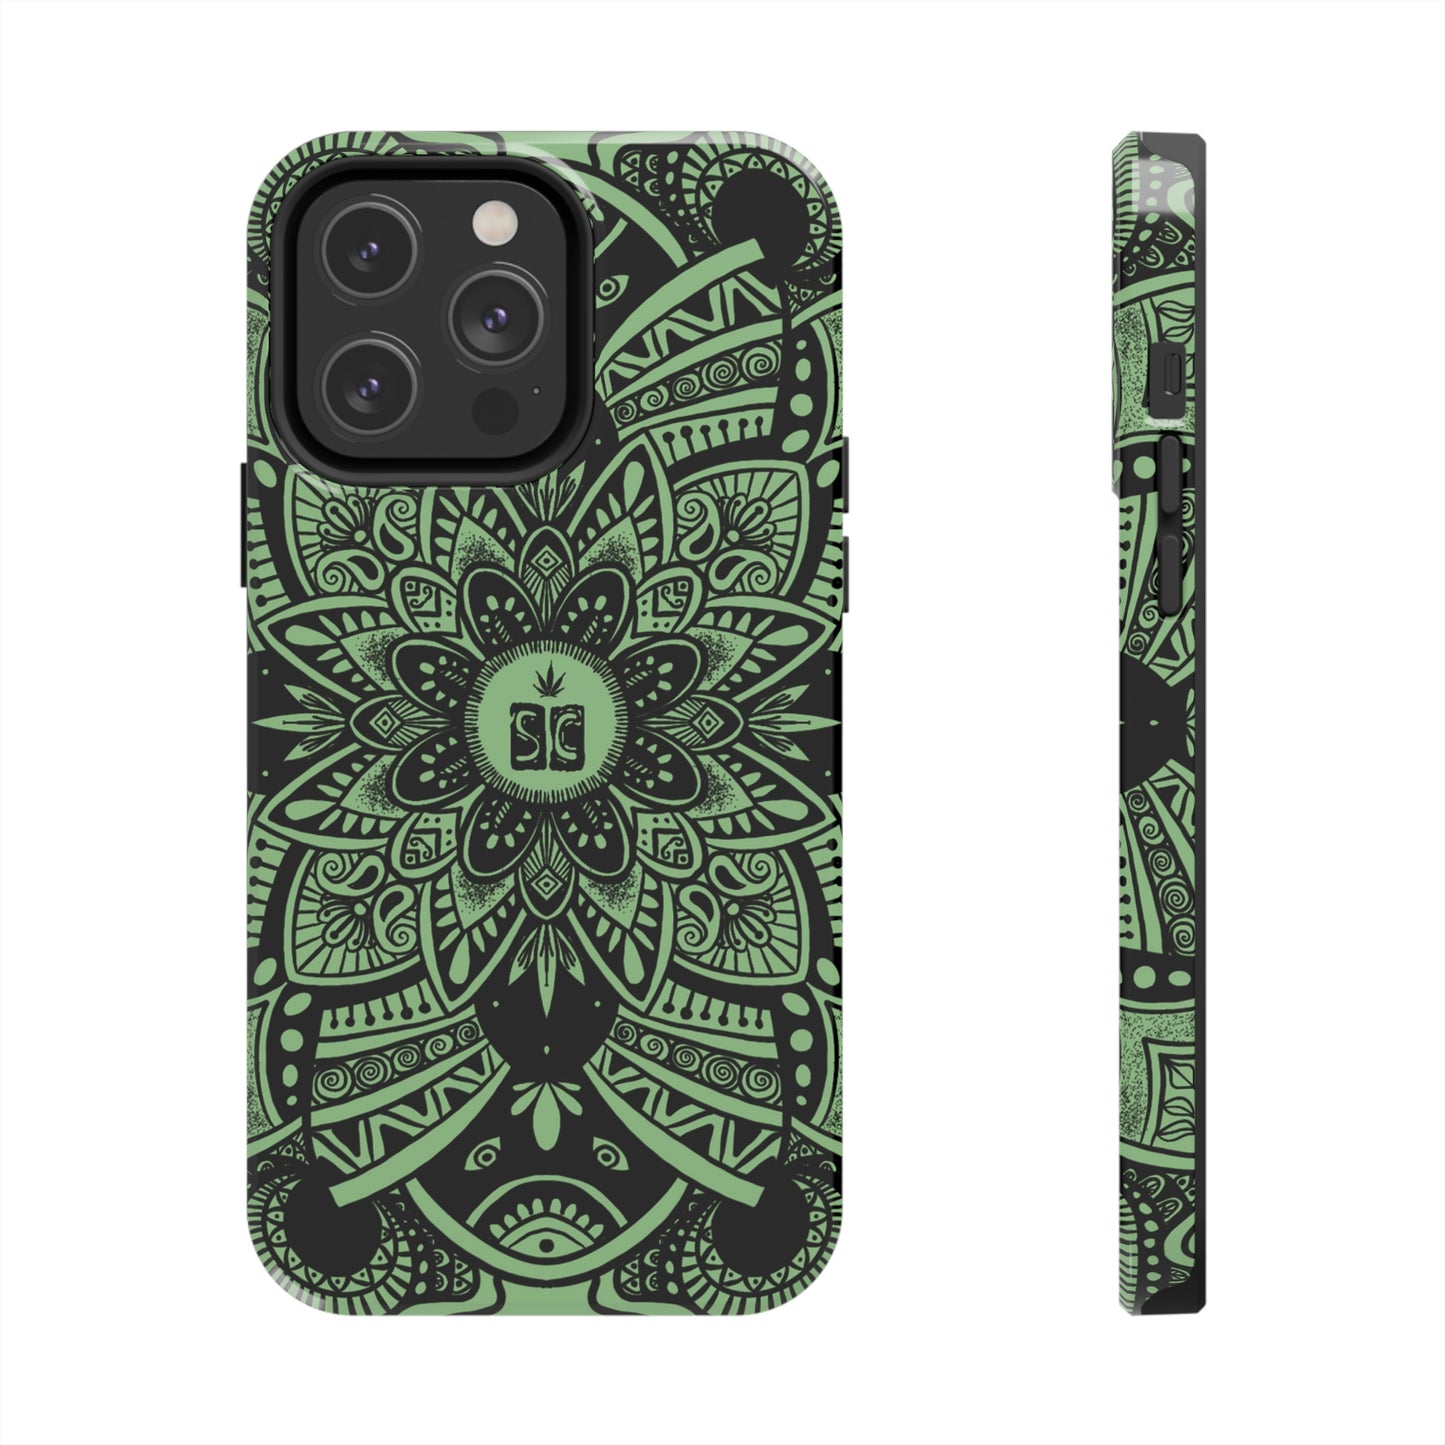 Shmackedala Phone Case - Black & Green